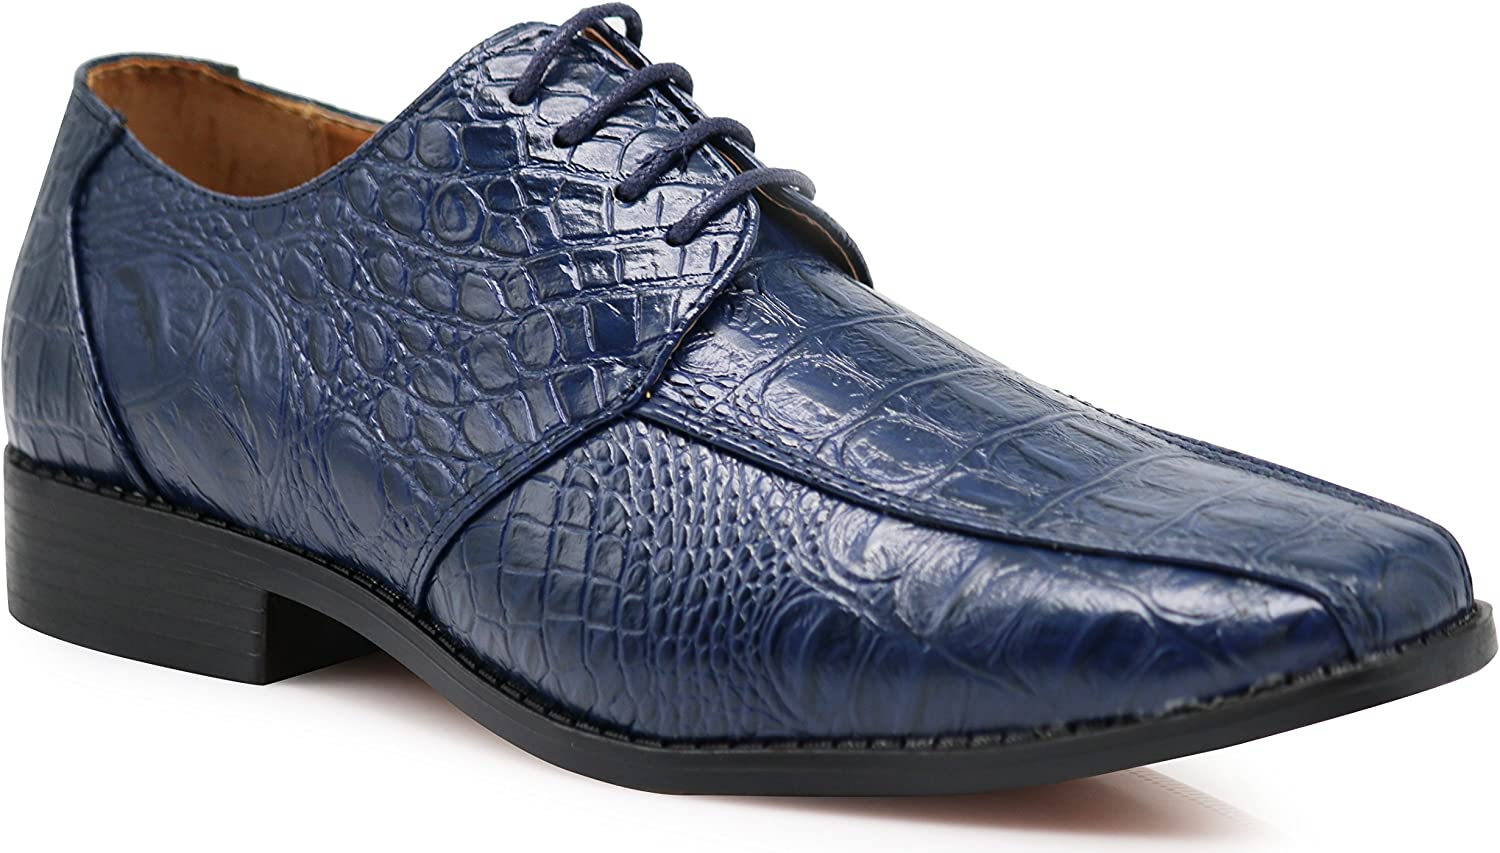 Men's Dress Shoes Liberty Leather Upper OXFORD Navy Crocodile  print,New & Box! 